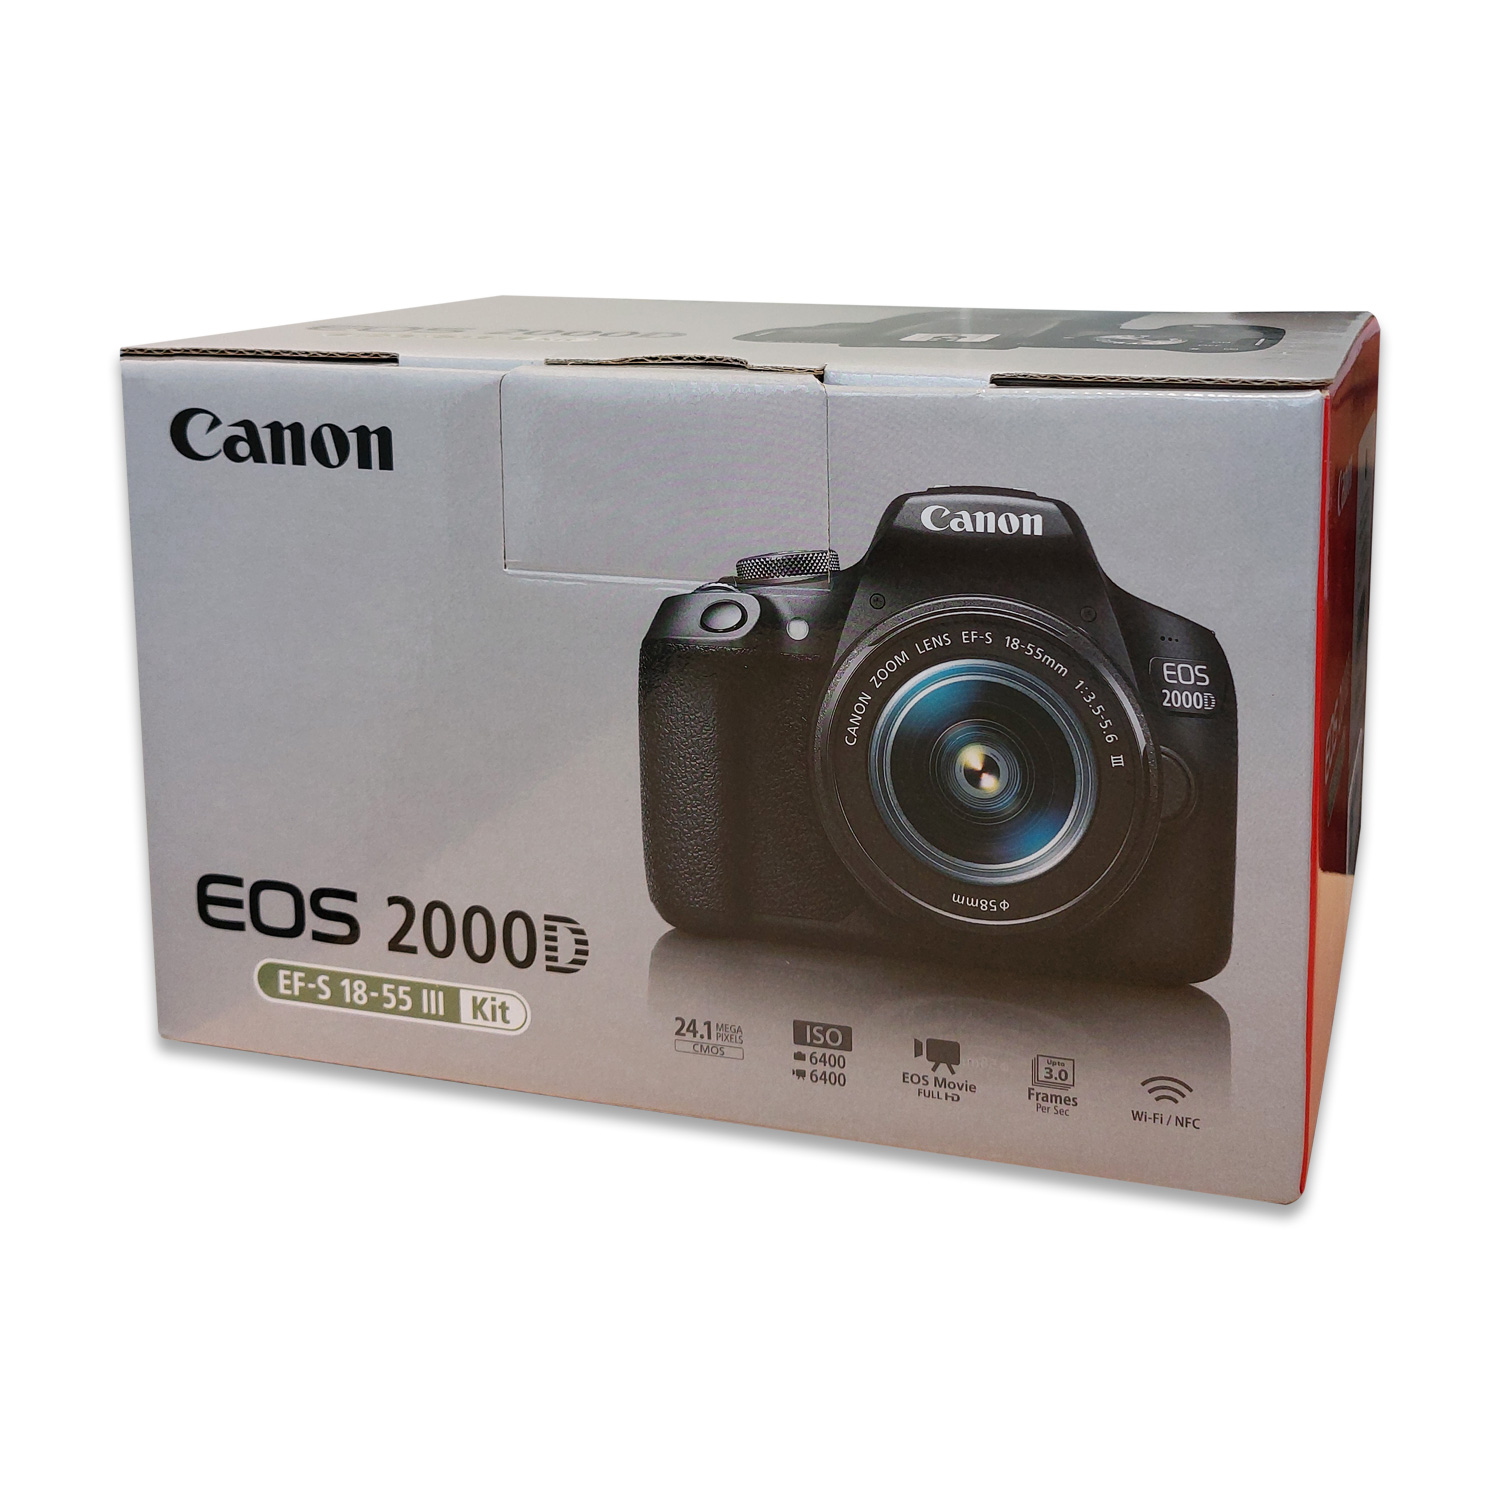 Canon EOS 2000D Spiegelreflexkamera mit Objektiv EF-S 18-55 III Kit